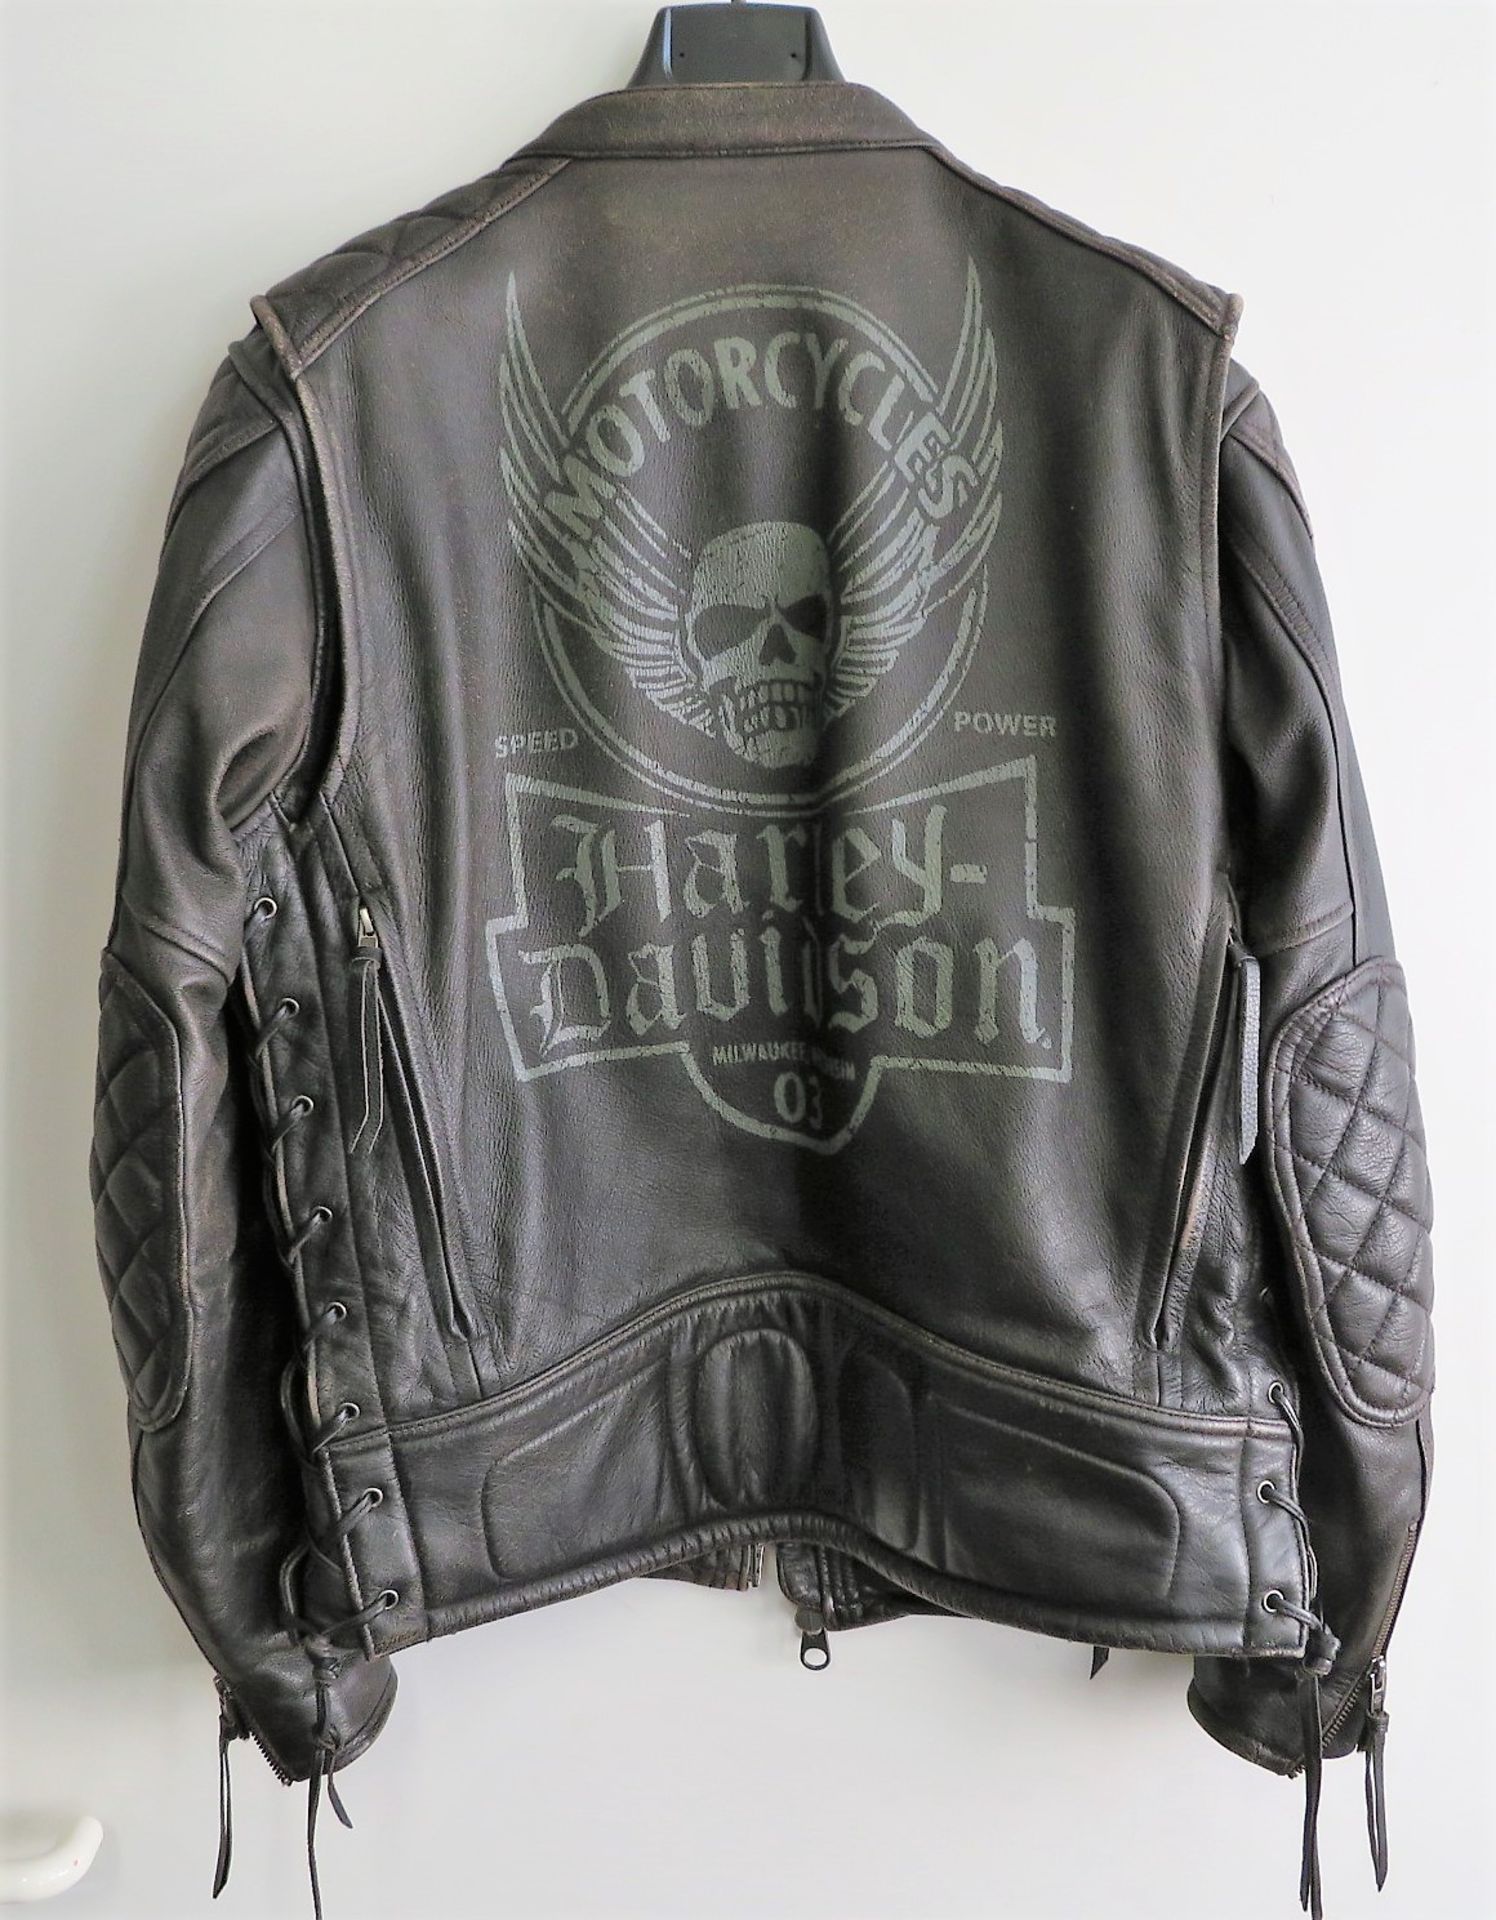 Lederjacke, Harley-Davidson, Riding Gear, Größe M, l 71 cm. - Bild 2 aus 2